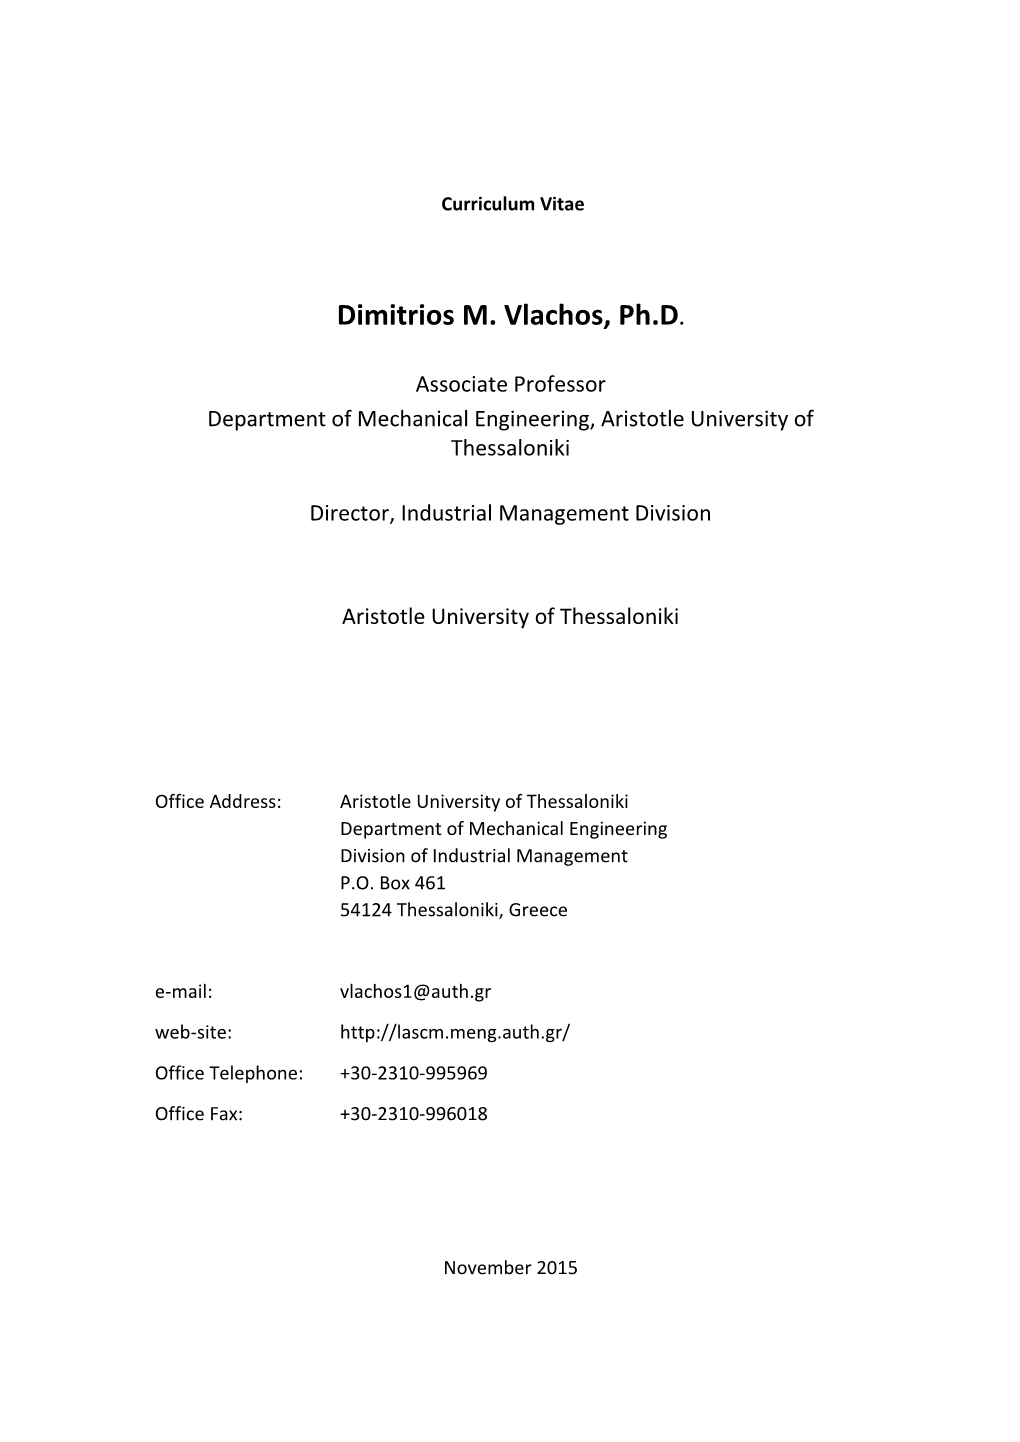 Dimitrios M. Vlachos, Ph.D